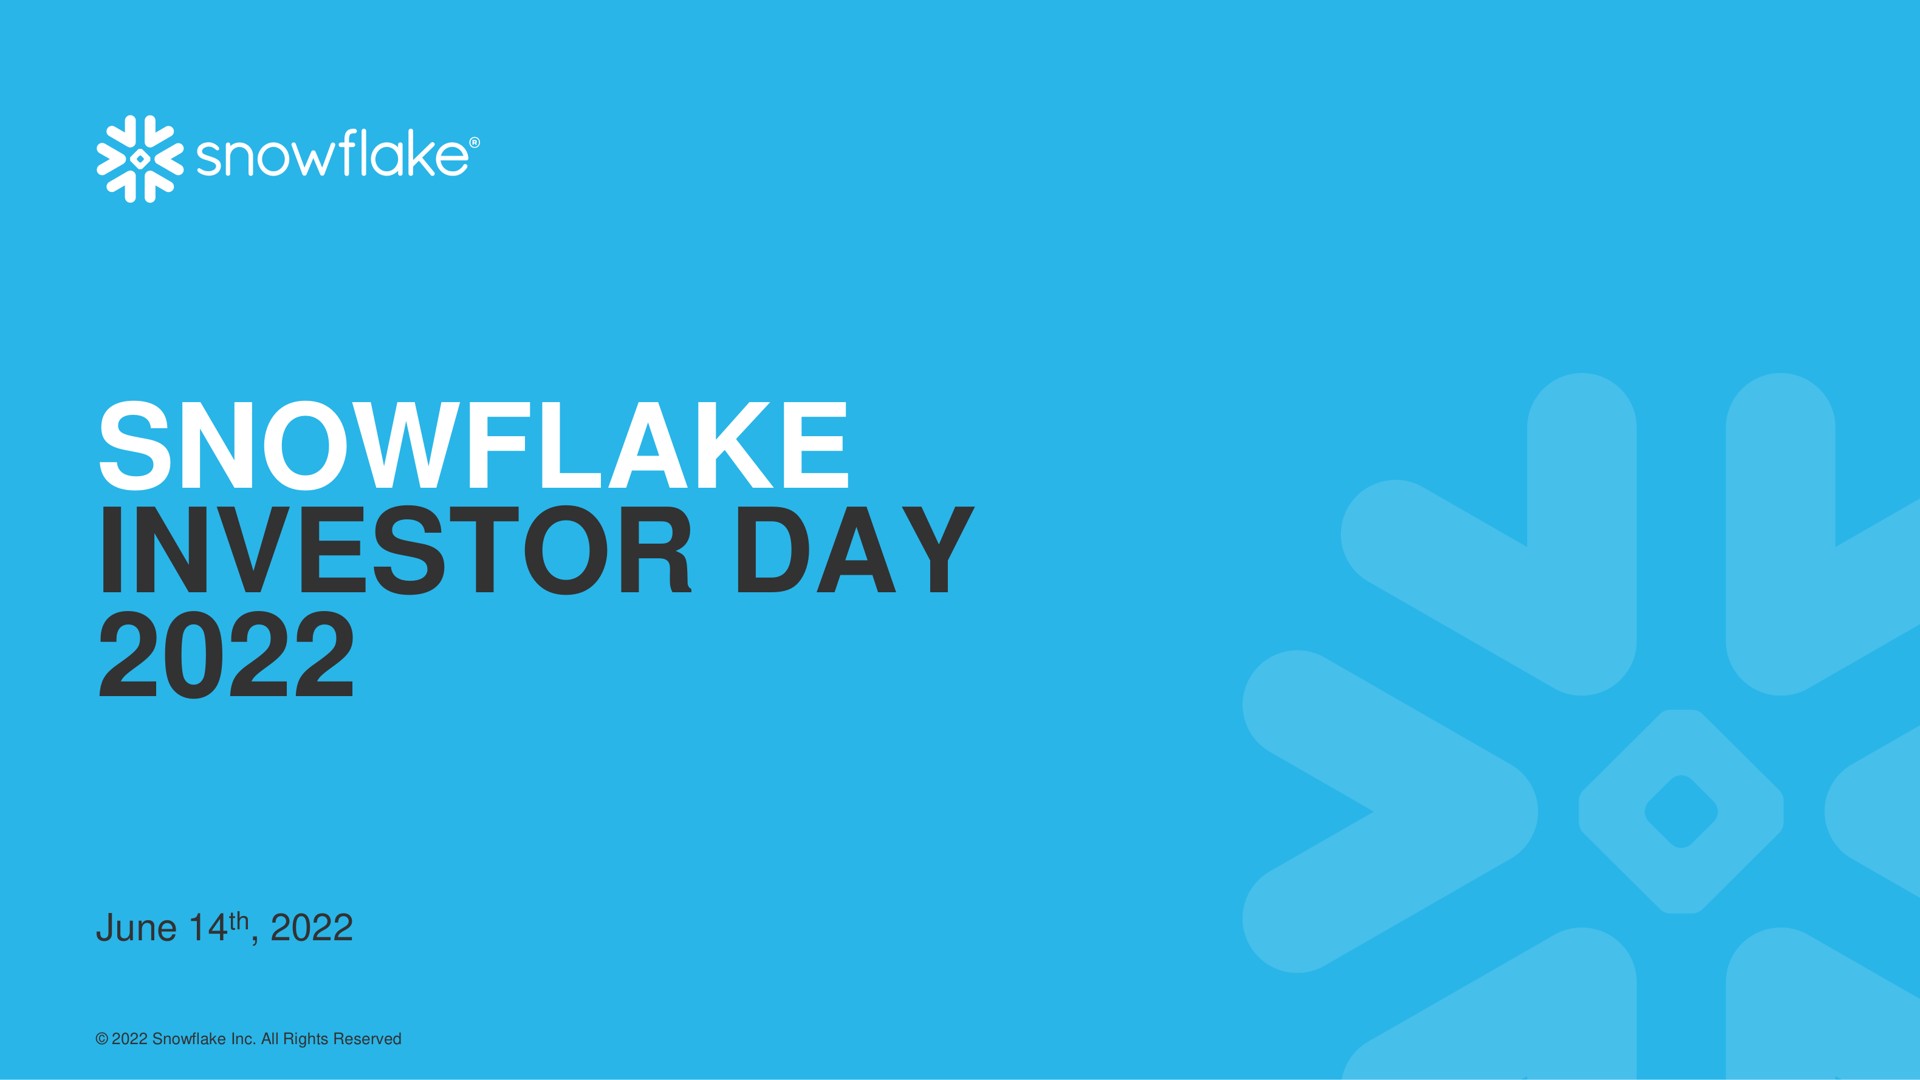 snowflake investor day | Snowflake